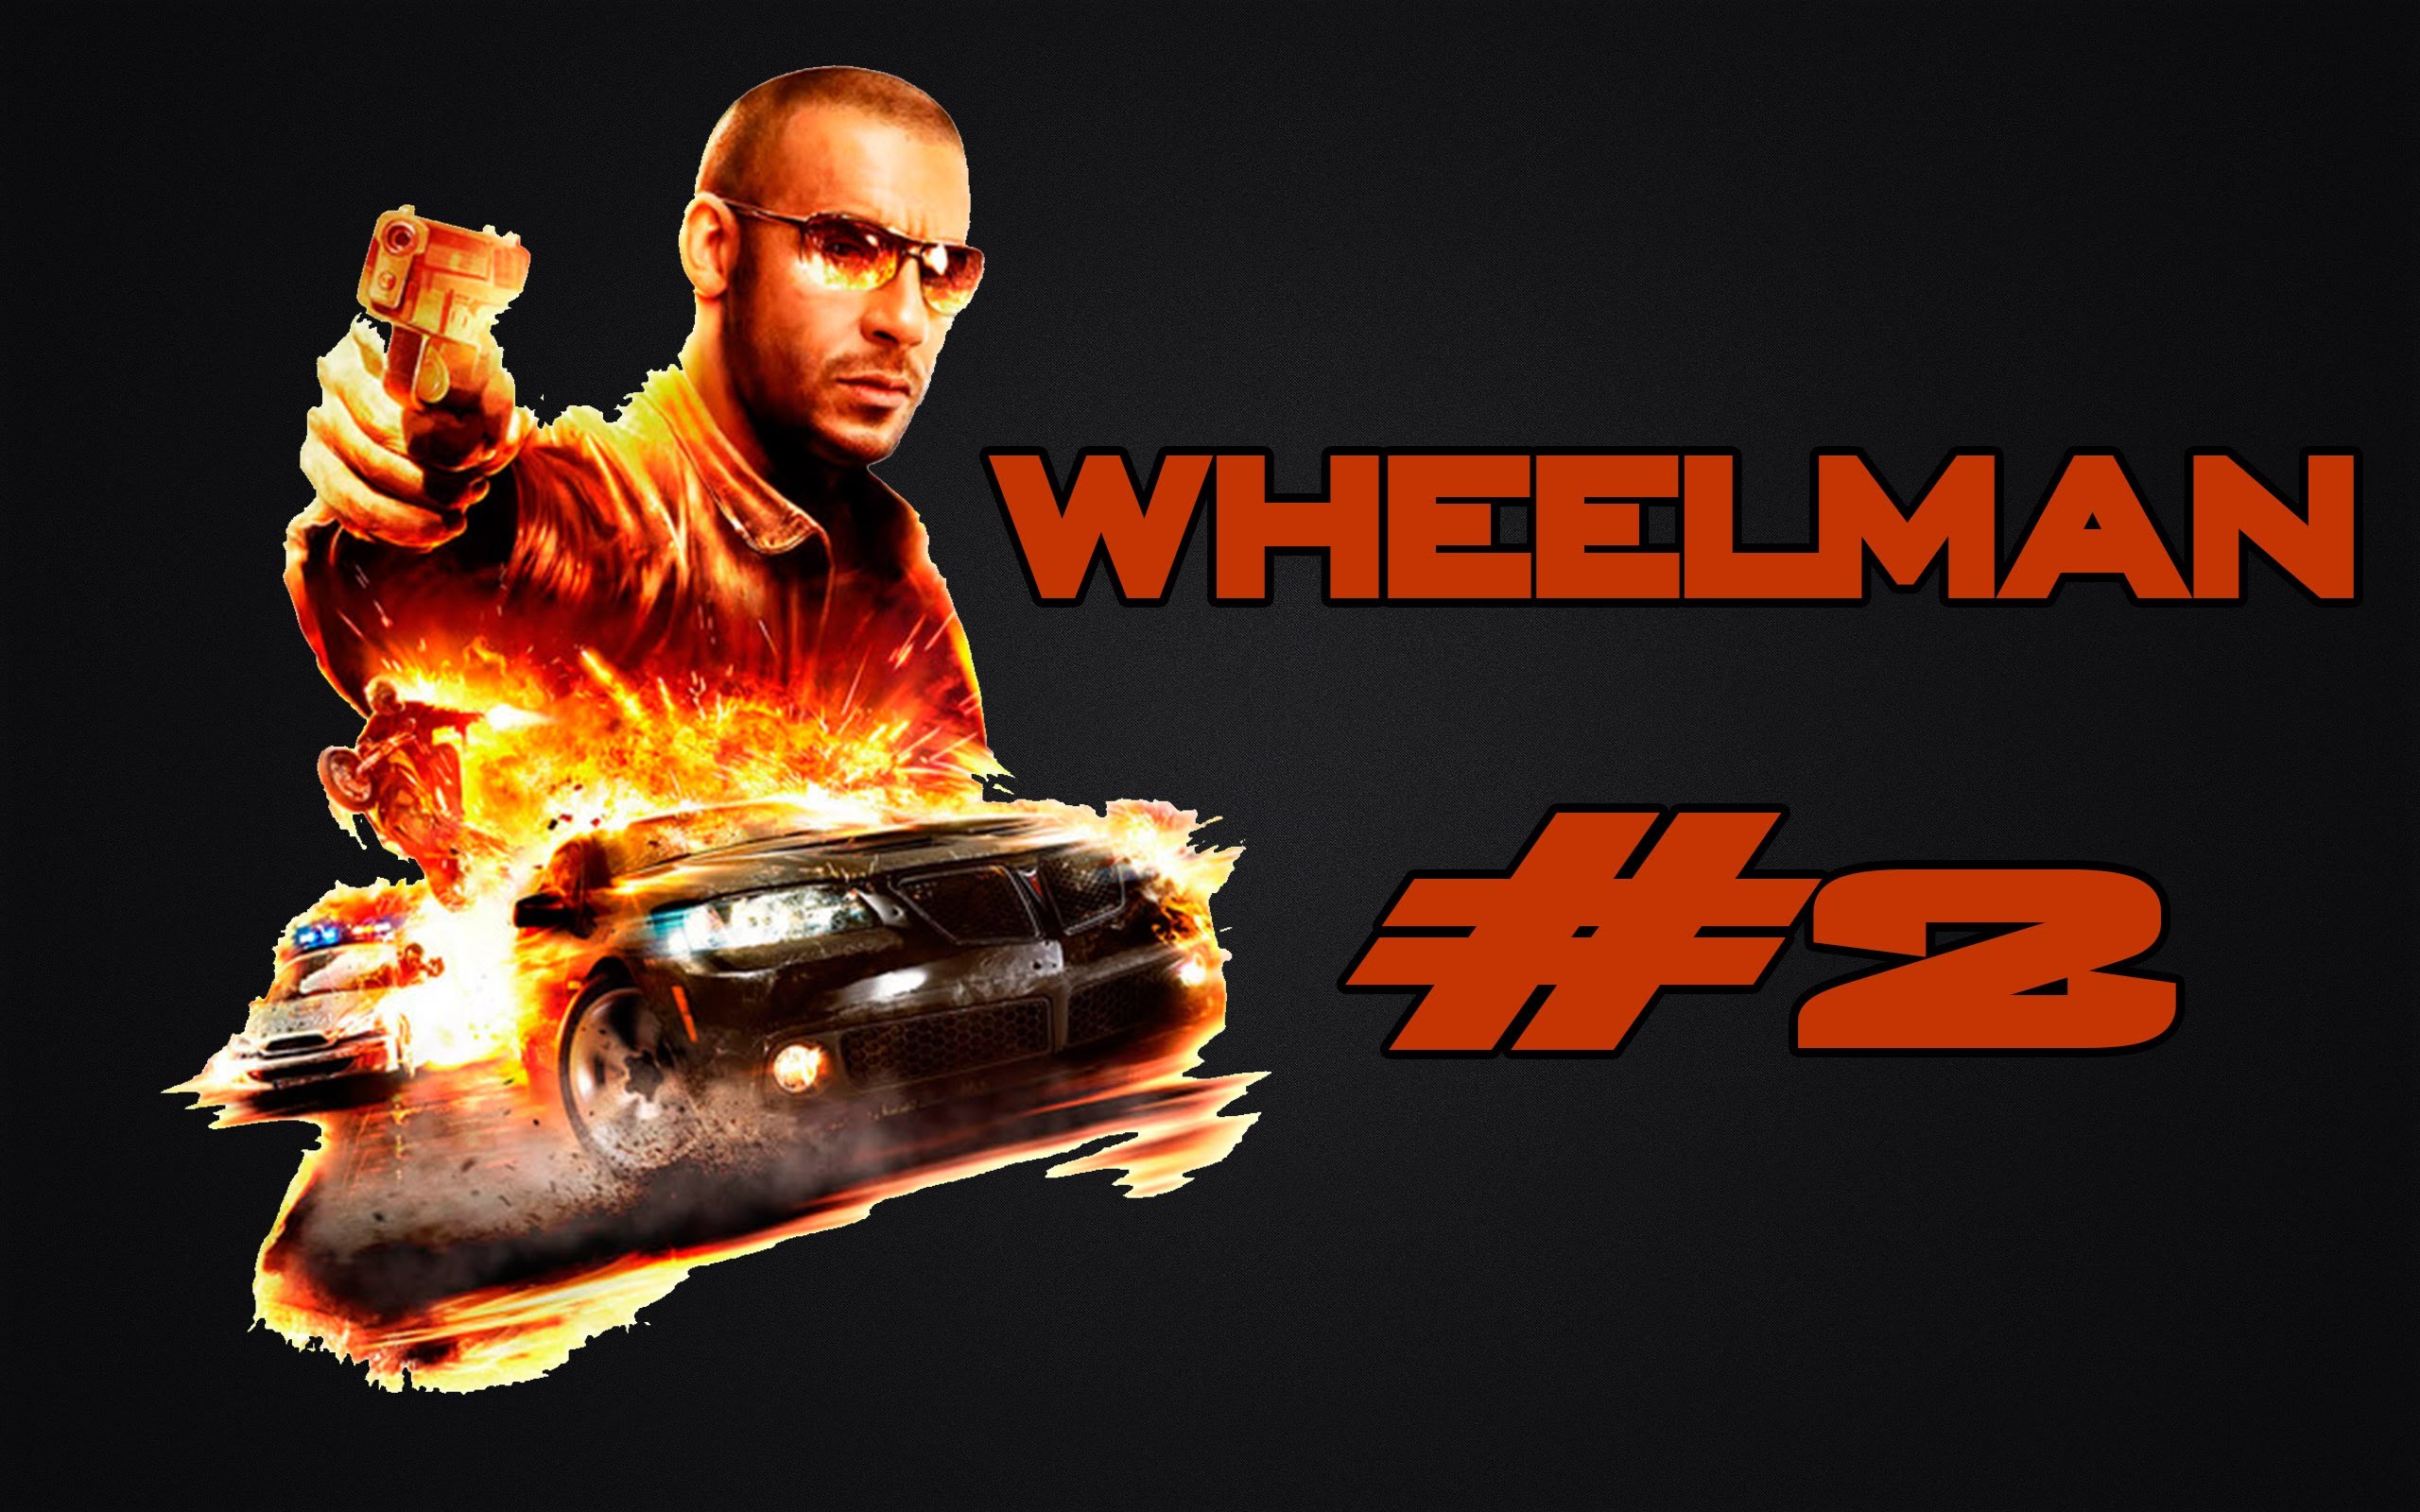 The wheelman